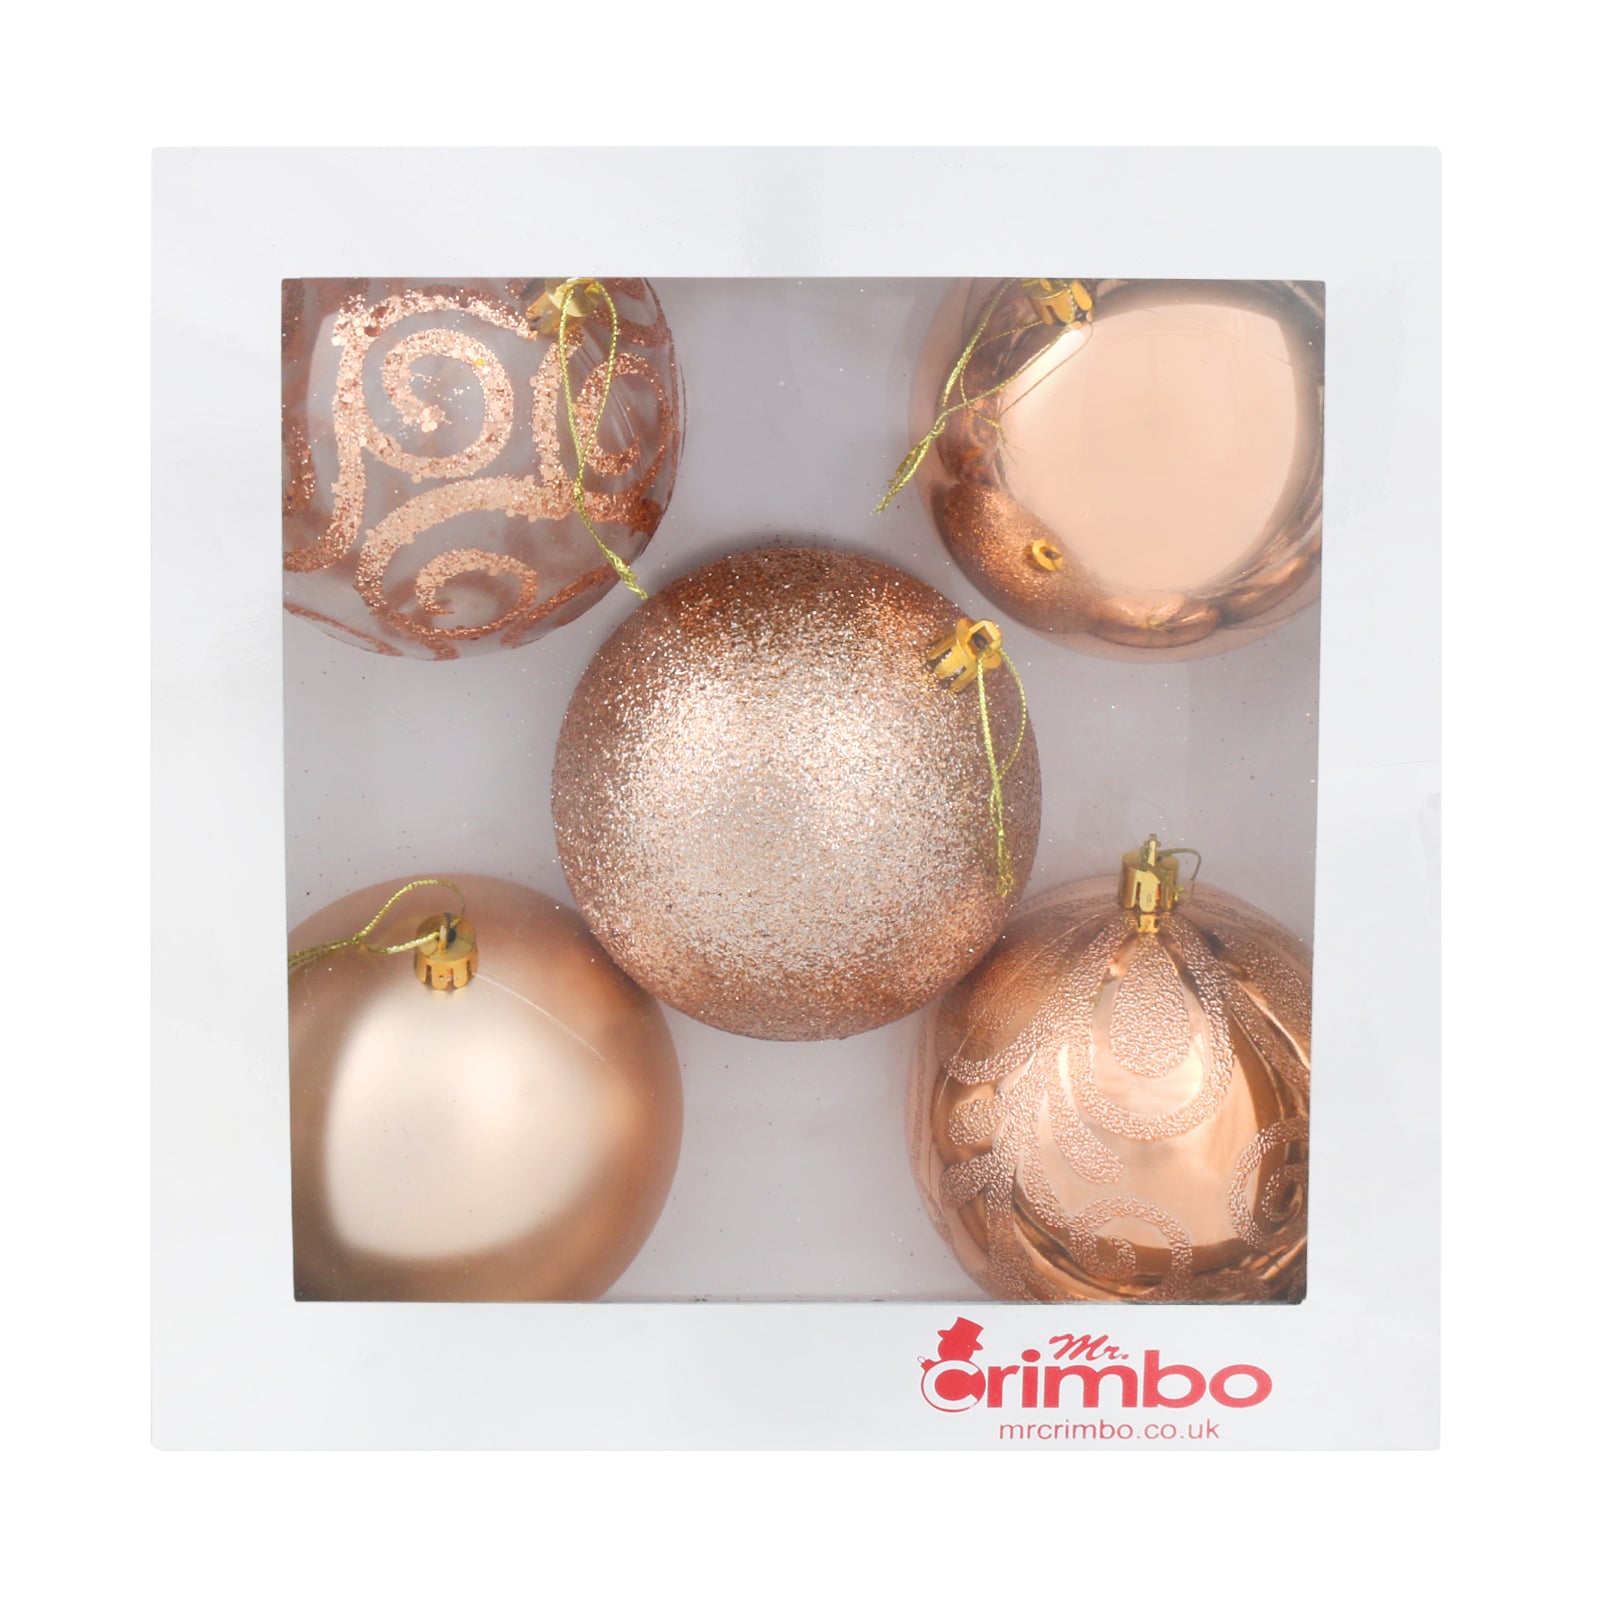 Mr Crimbo 5 x 10cm Christmas Tree Baubles Various Colours - MrCrimbo.co.uk -XS5685 - Champagne -Baubles